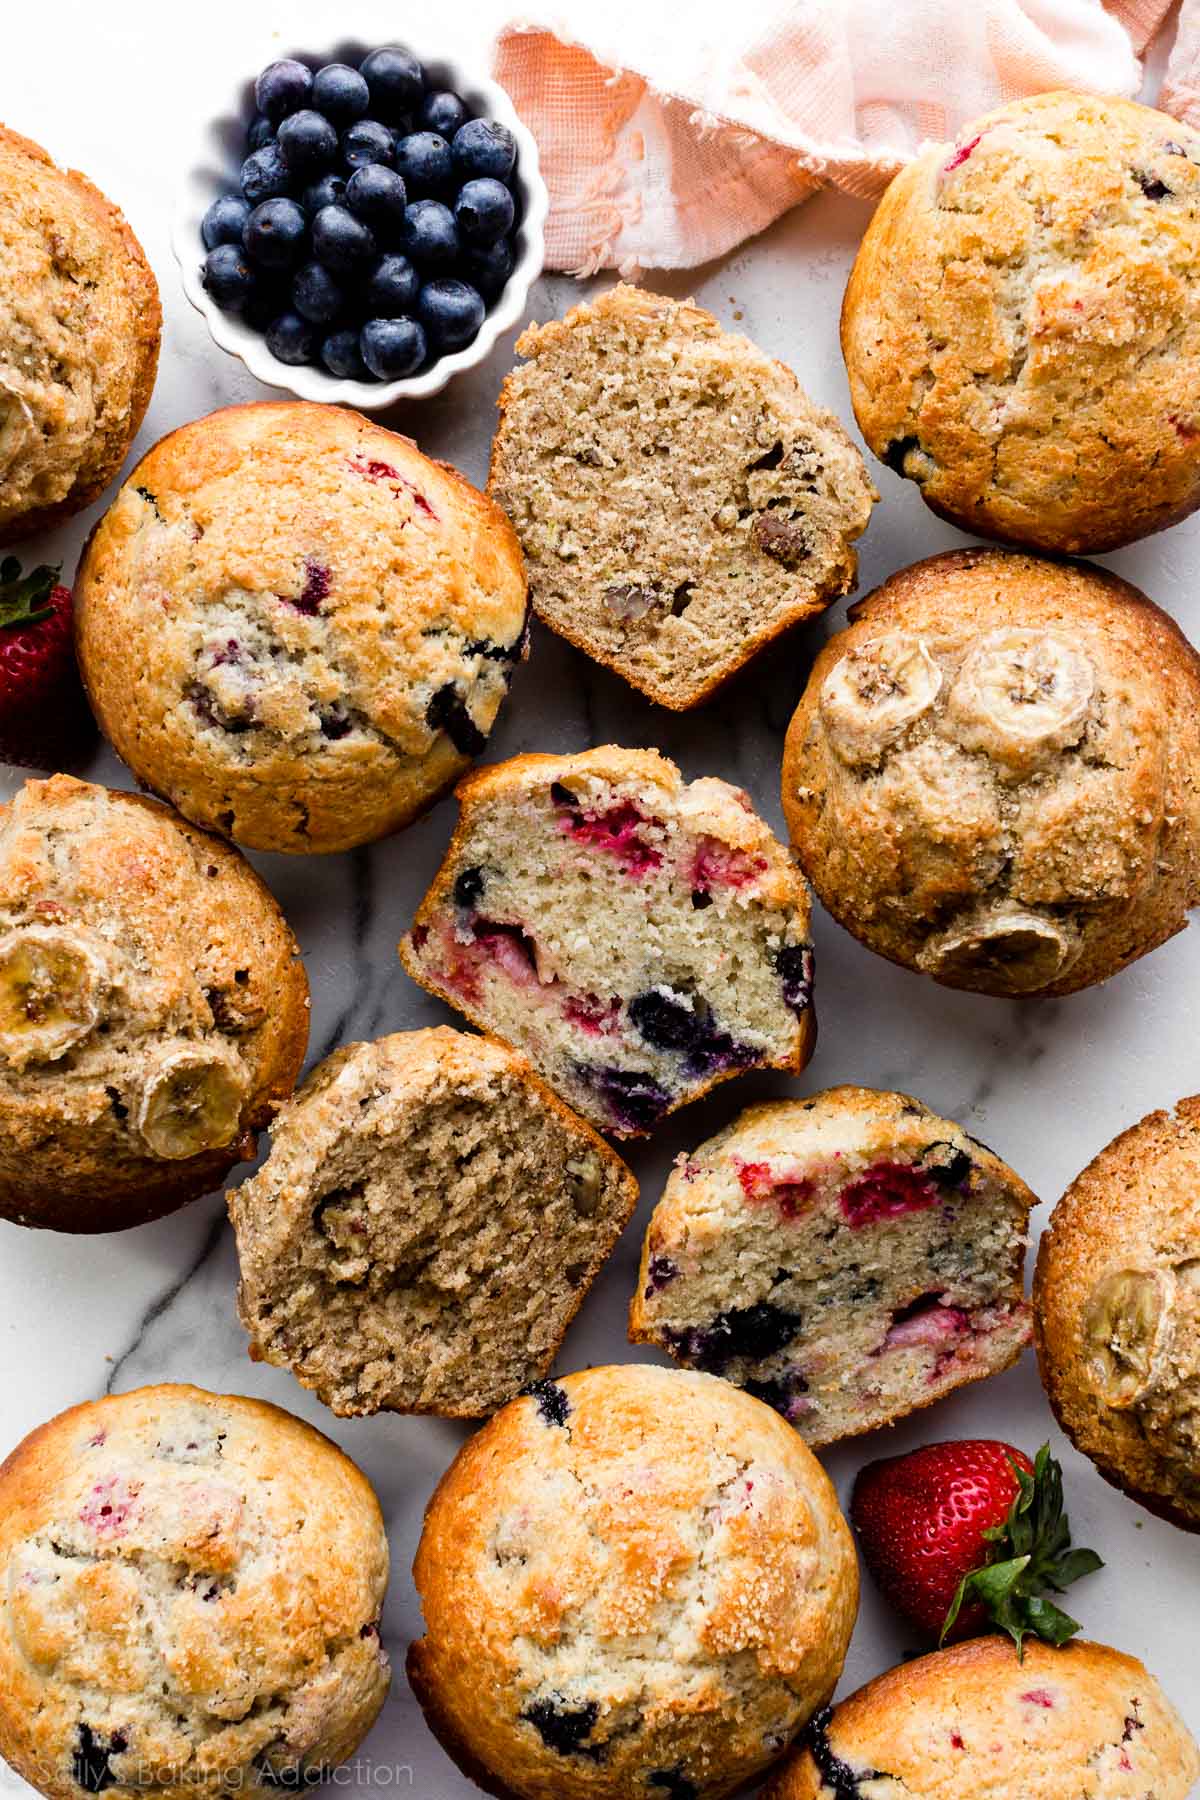 Master Bakery-Style Muffin Recipe - Sally's Baking Addiction.